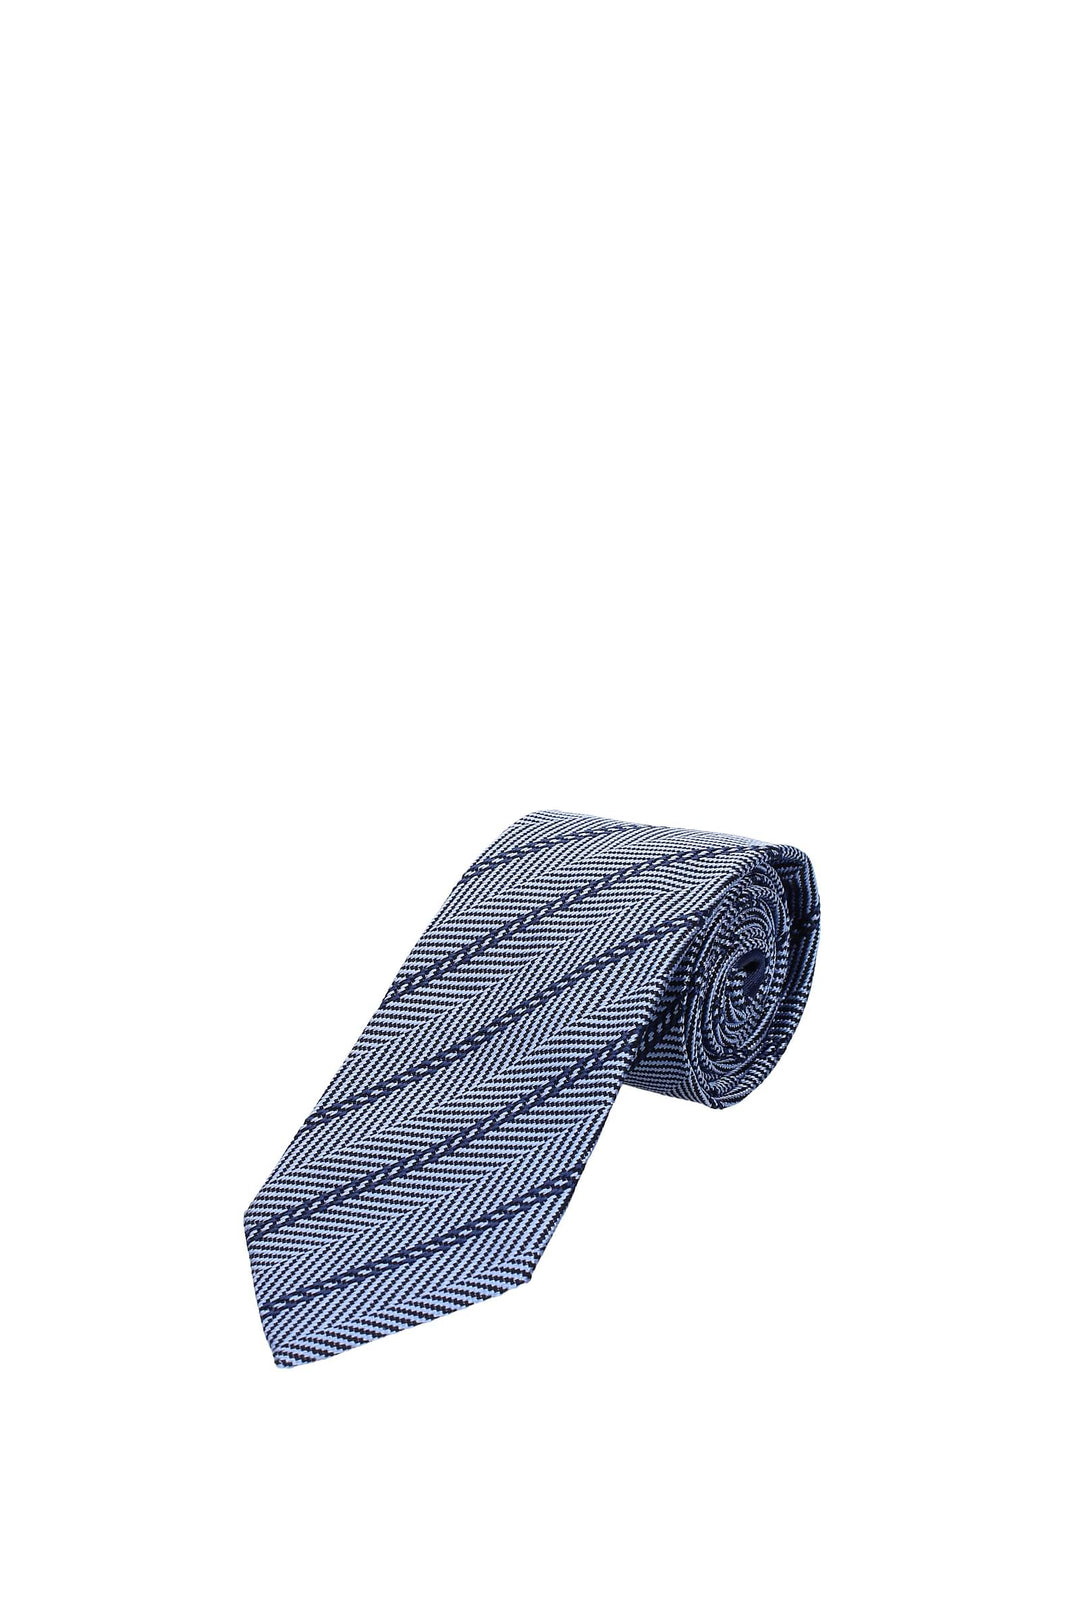 Cravatte Seta Celeste Blu - Zegna - Uomo